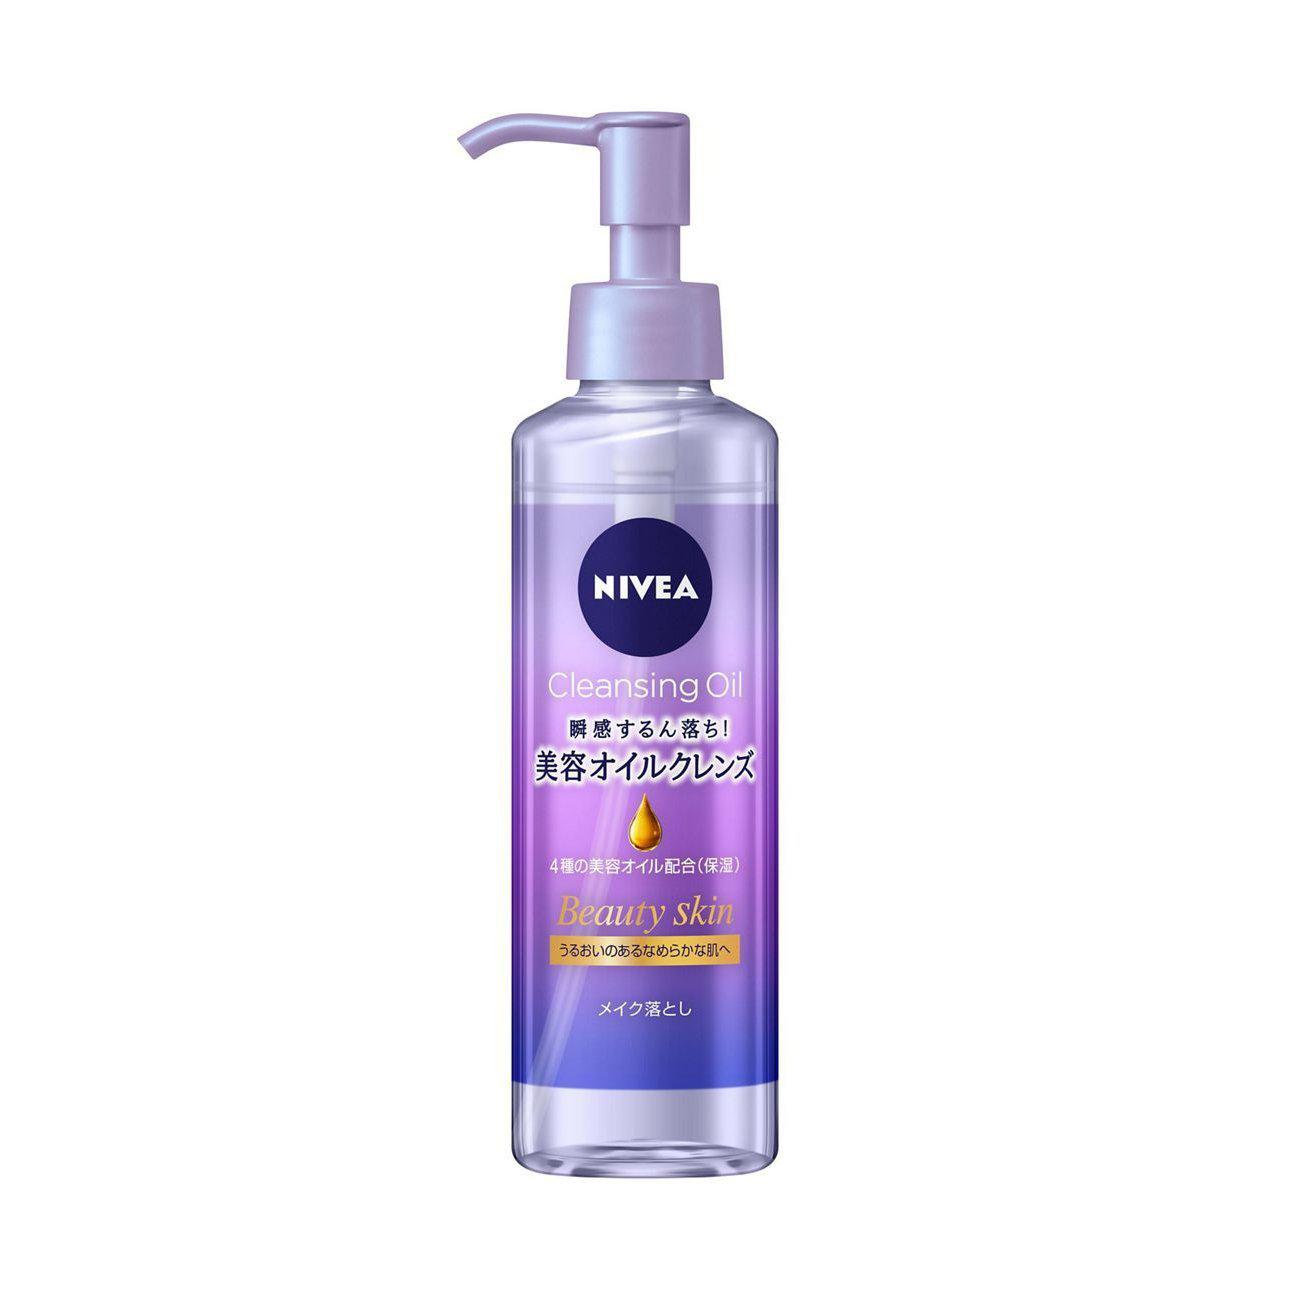 Nivea Cleansing Oil Beauty Skin Makeup Cleanser 195ml-Japanese Taste